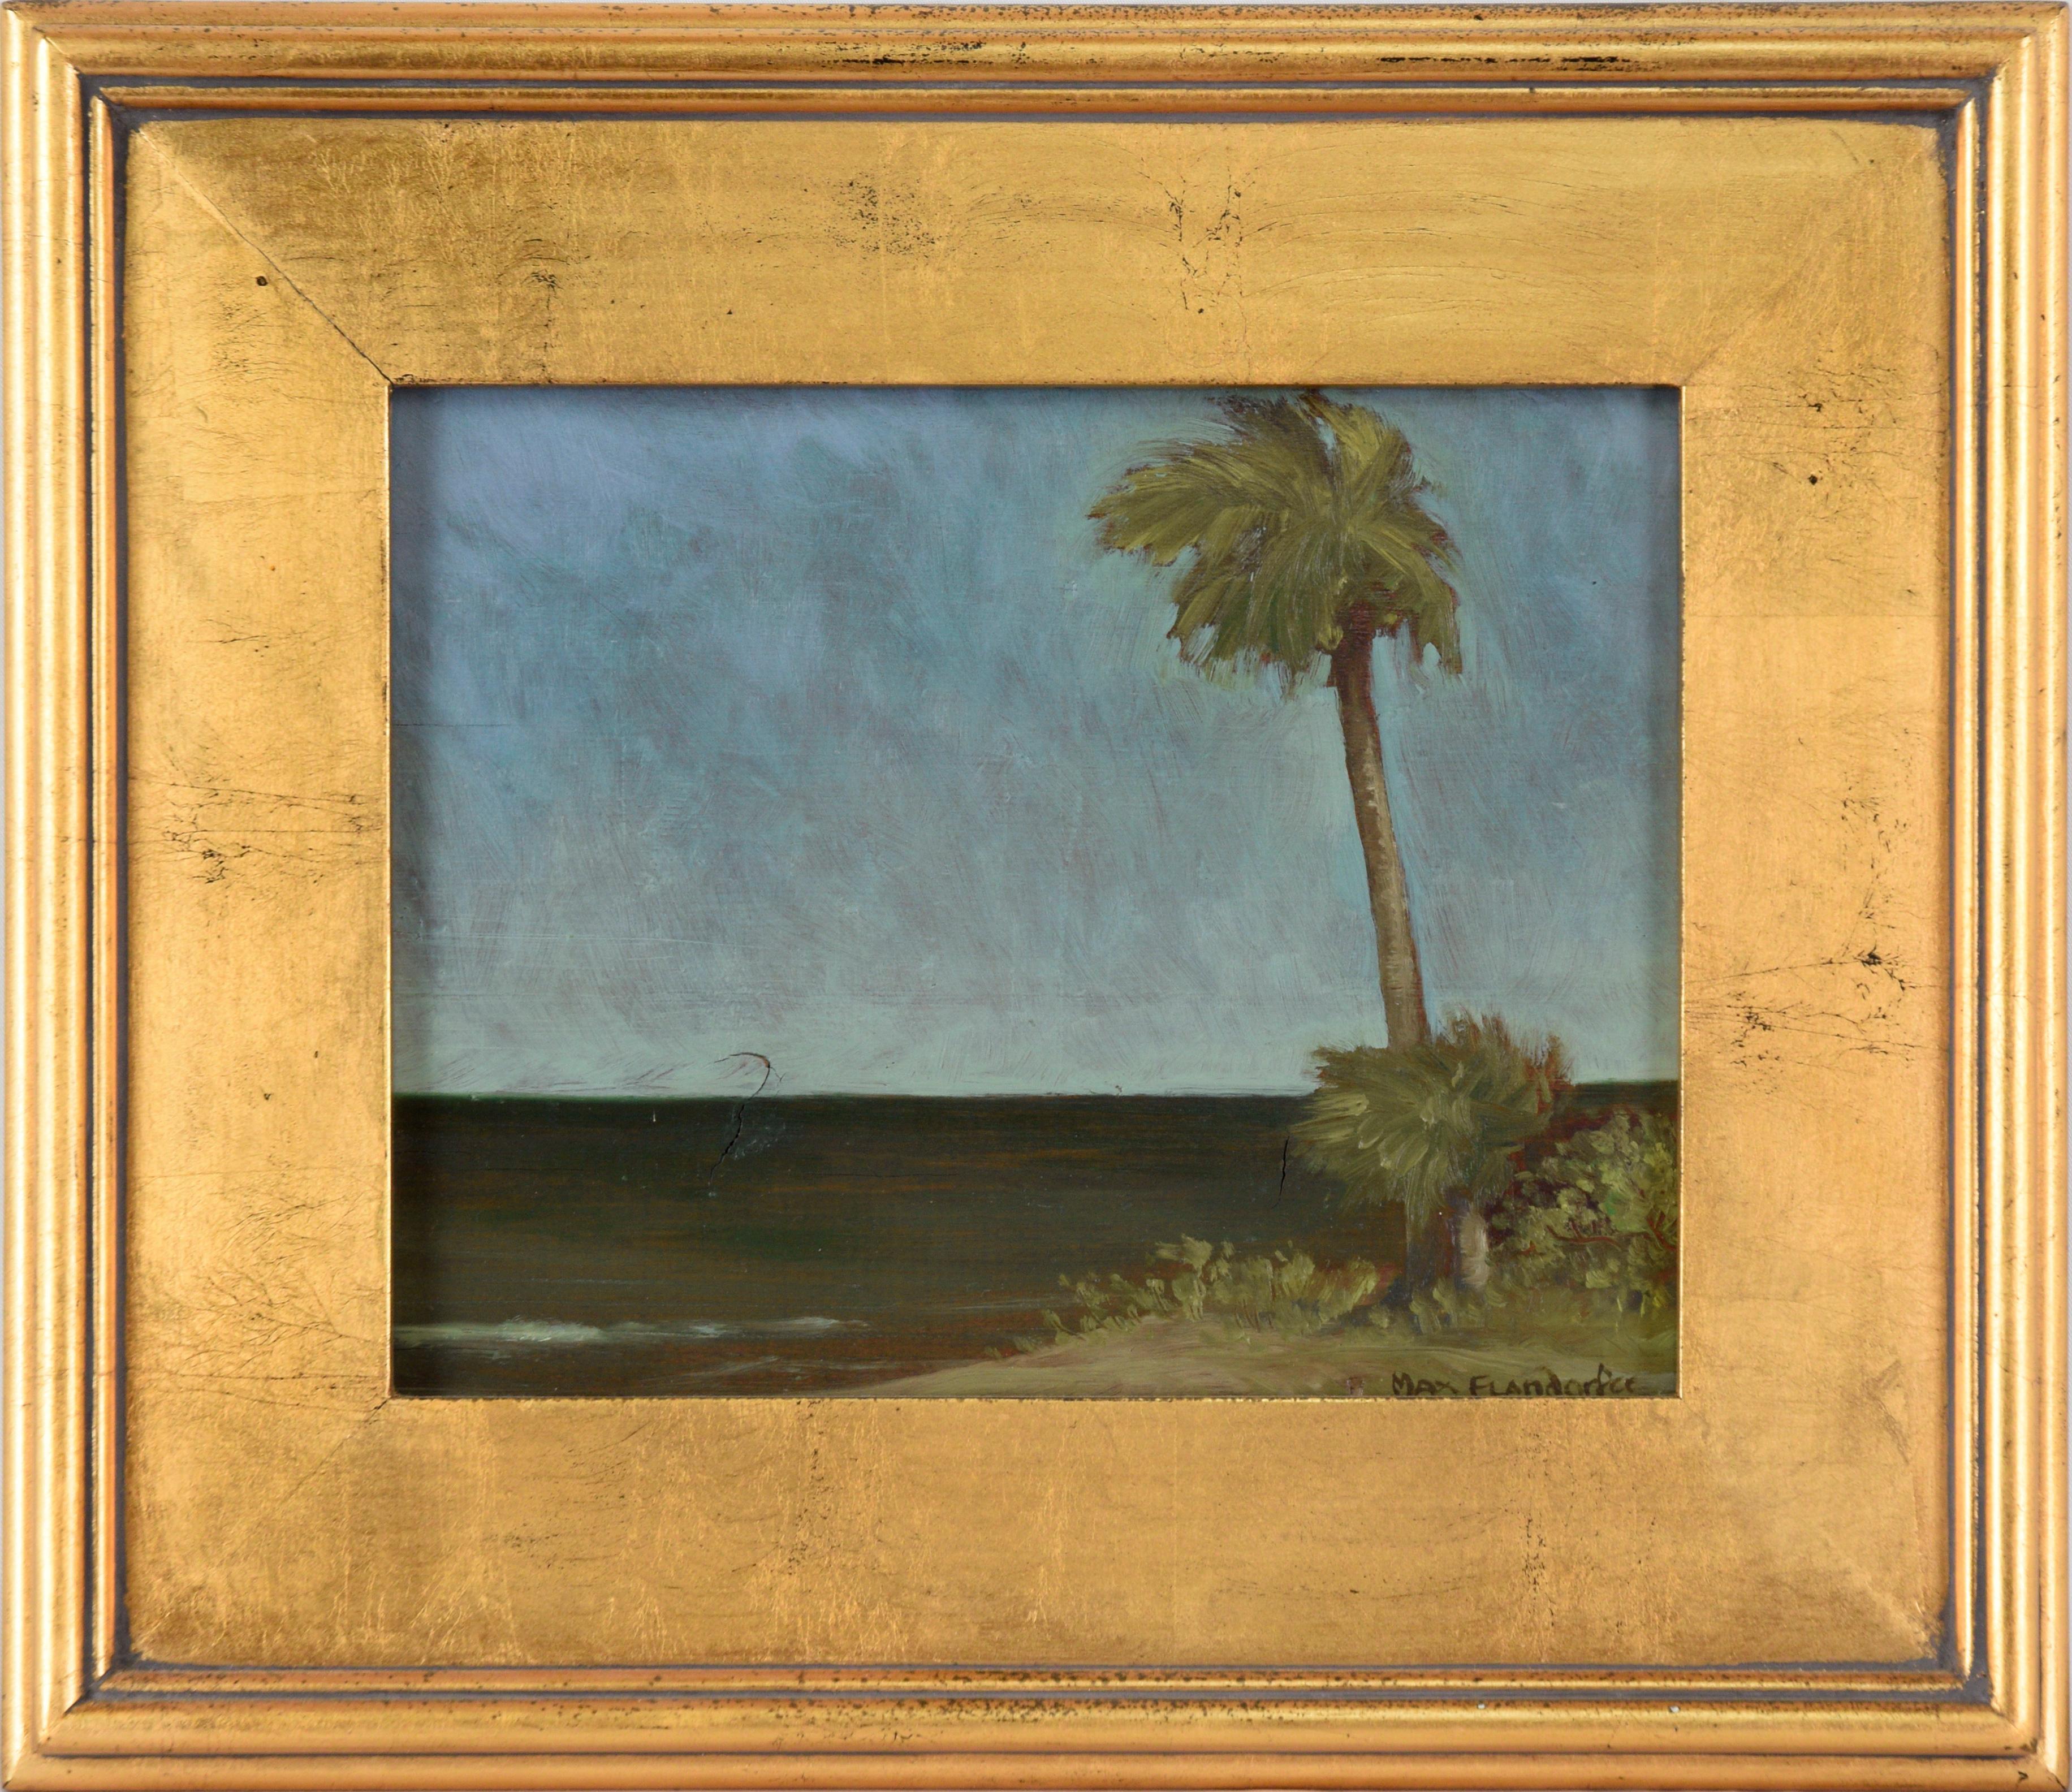 Max Flandorfer Landscape Painting - "Florida Gulf Coast Sunset" Seascape in Oil on Wood Panel